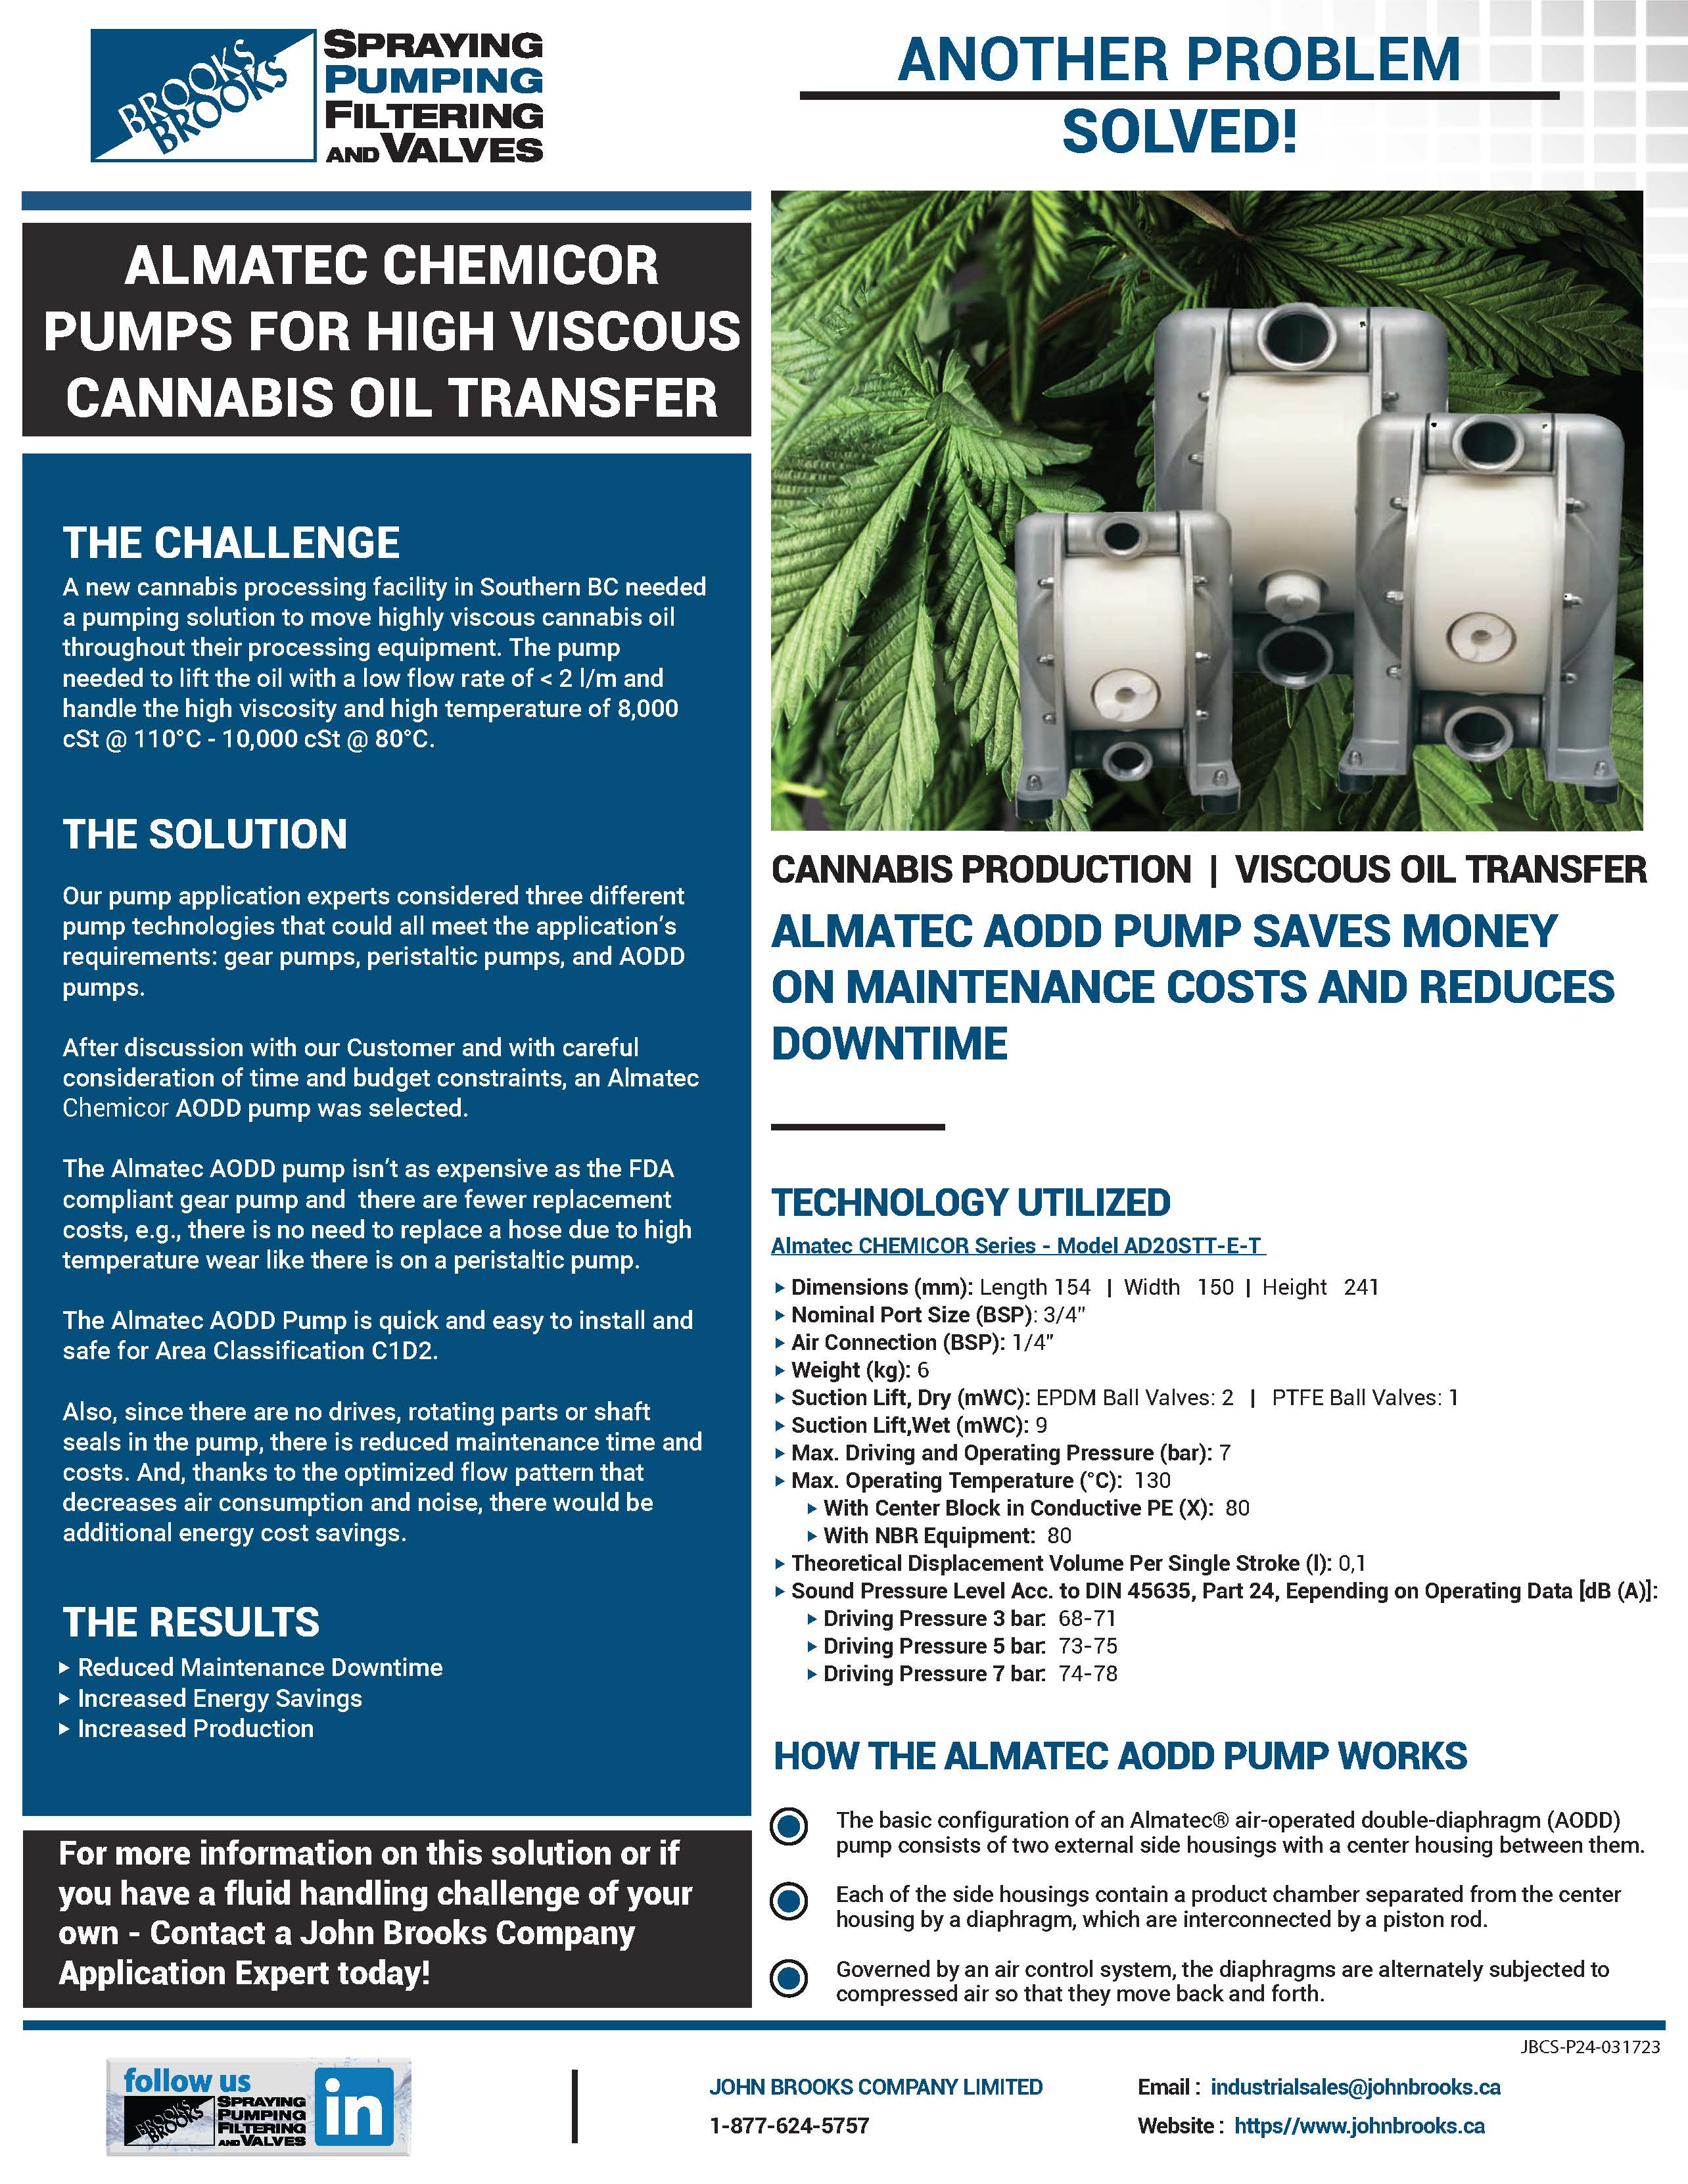 Almatec Chemicor AODD Pump for High Viscous Cannabis Oil Transfer